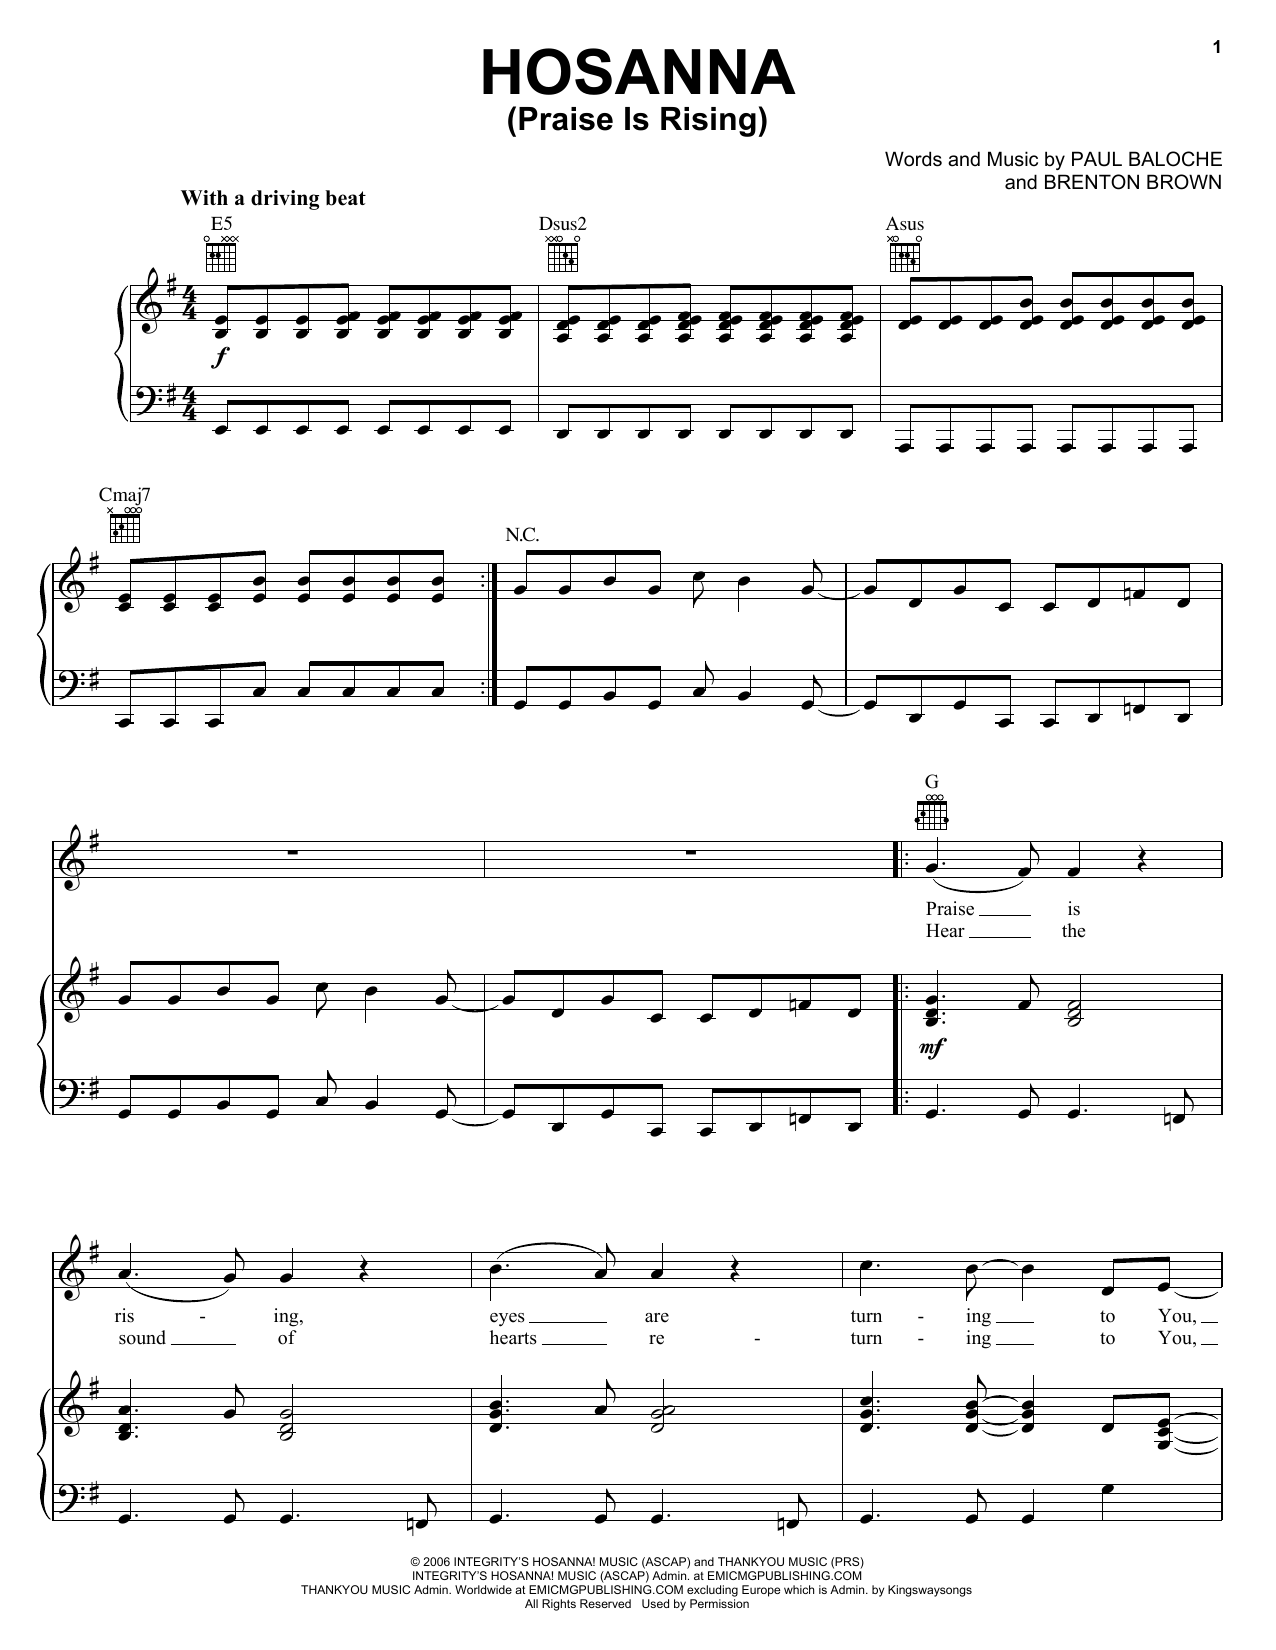 Paul Baloche Hosanna (Praise Is Rising) Sheet Music Notes & Chords for Violin Solo - Download or Print PDF